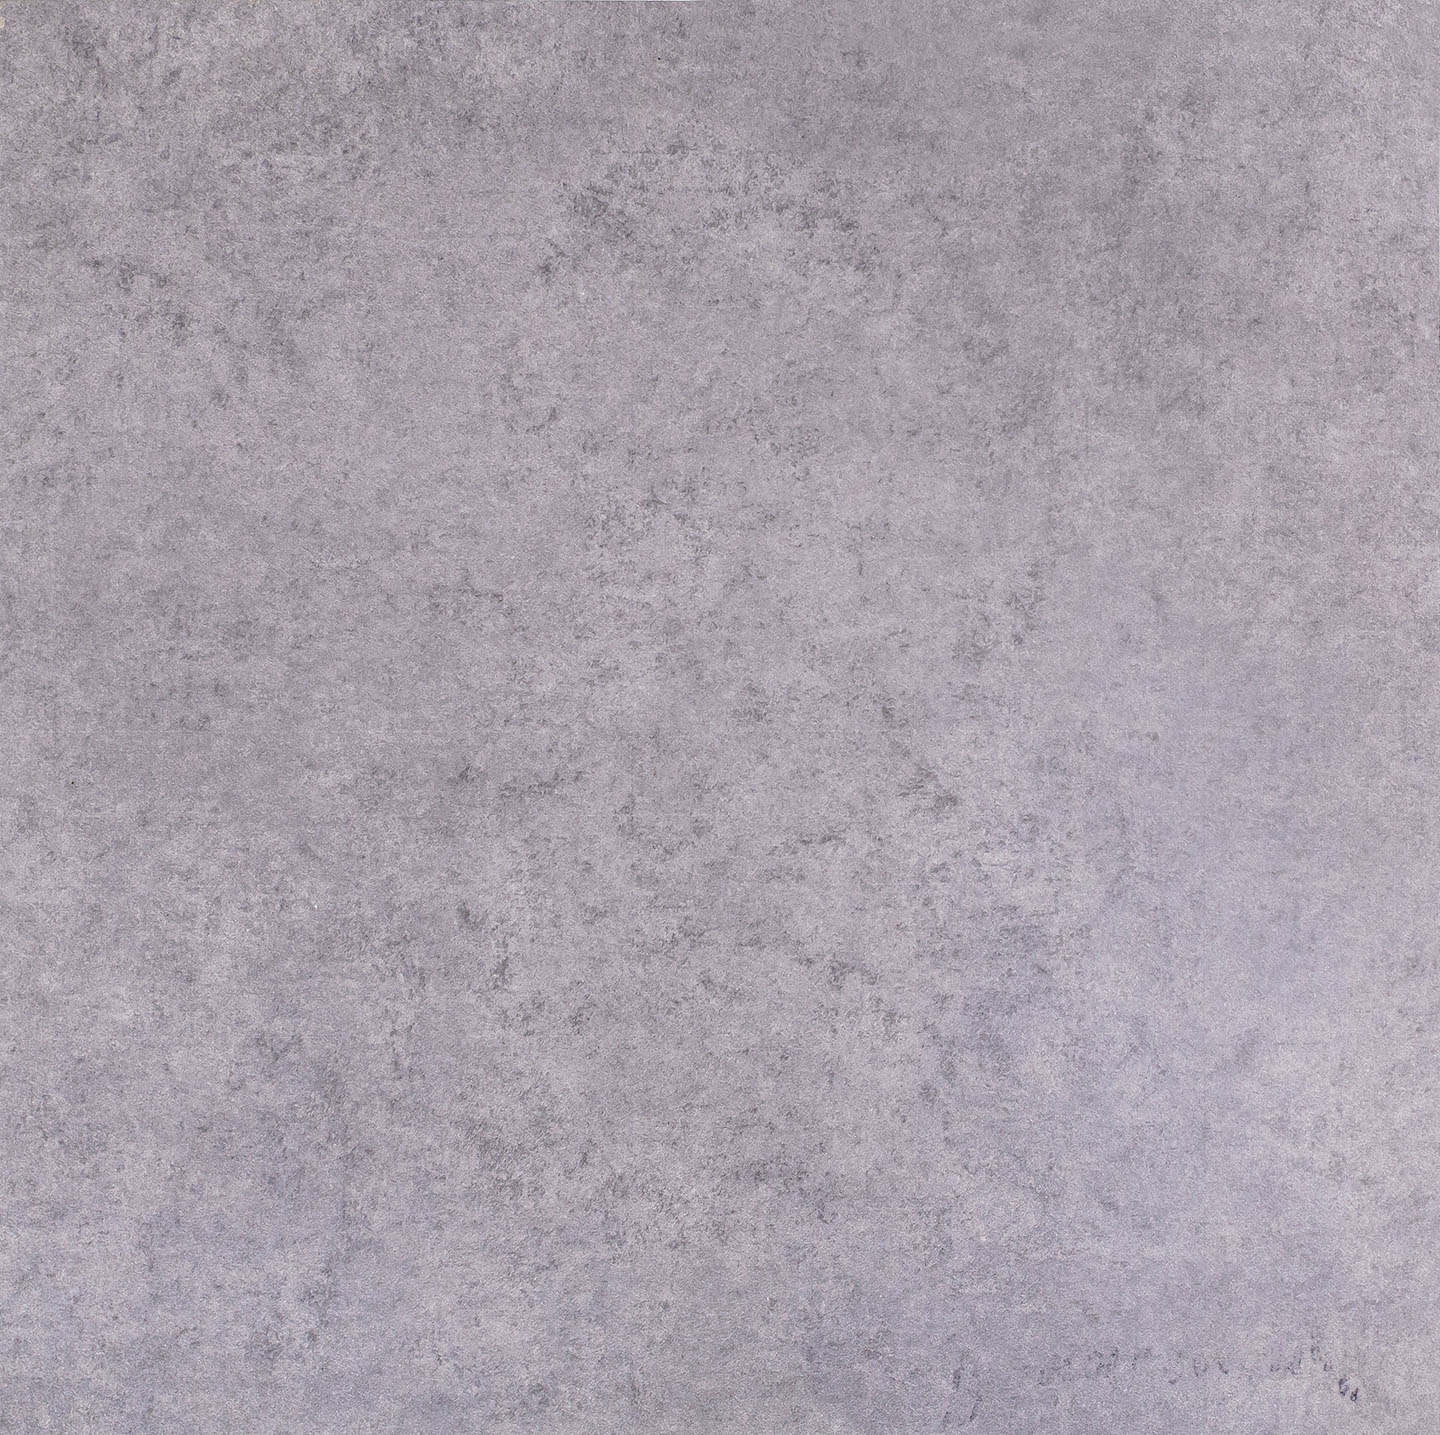 Керамогранит Diamond grey PG 01 серый, серый